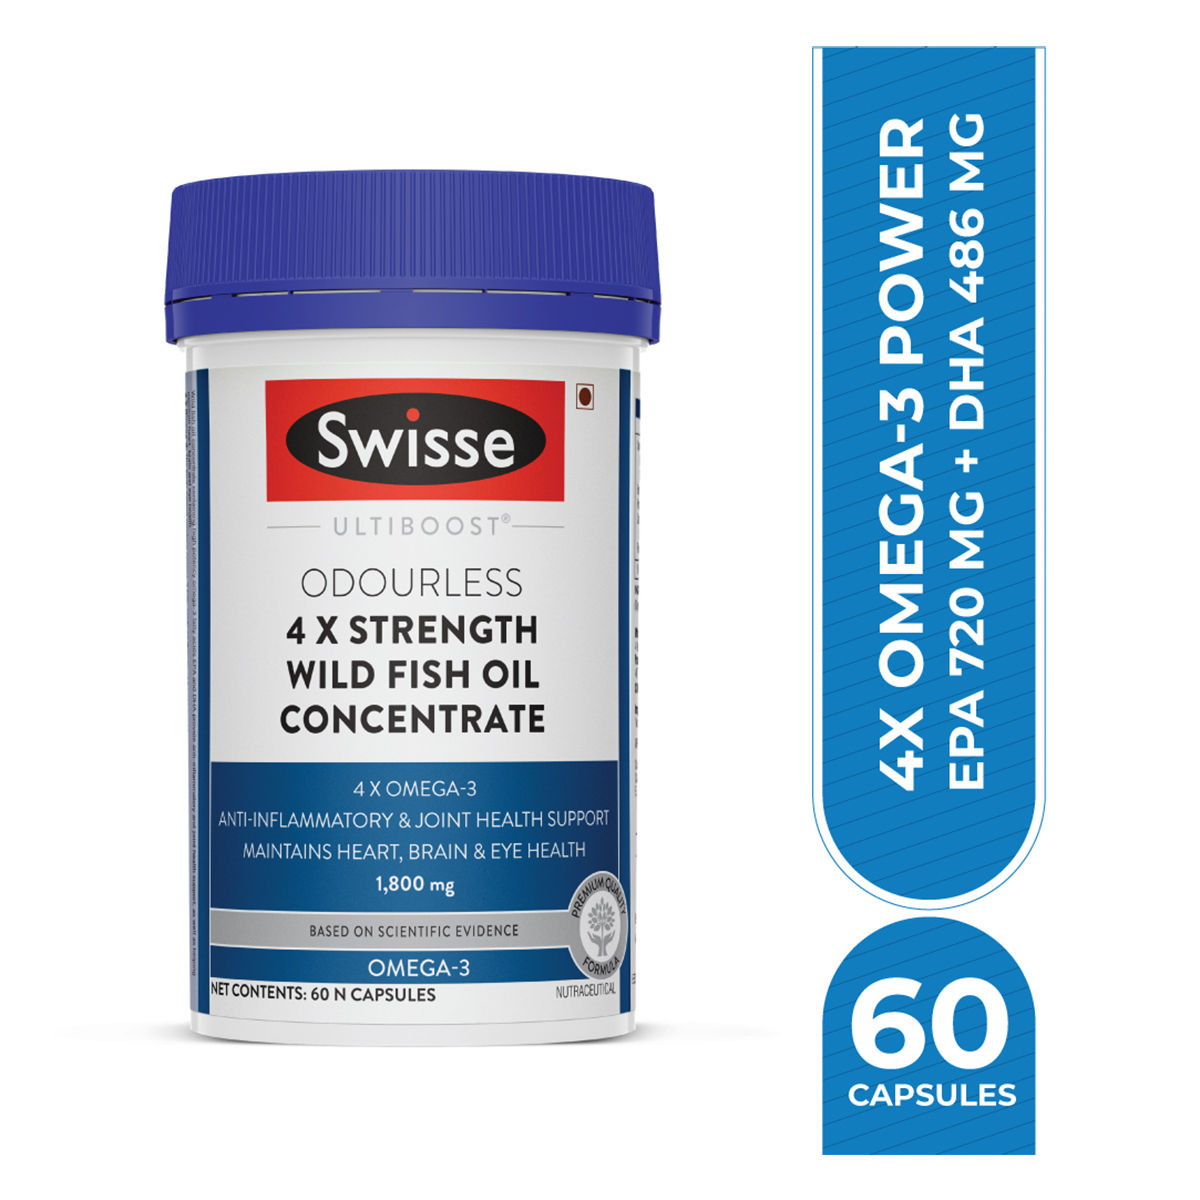 Buy Swisse Ultiboost 1800 mg 4X Strength Wild Fish Oil, 60 Capsules Online